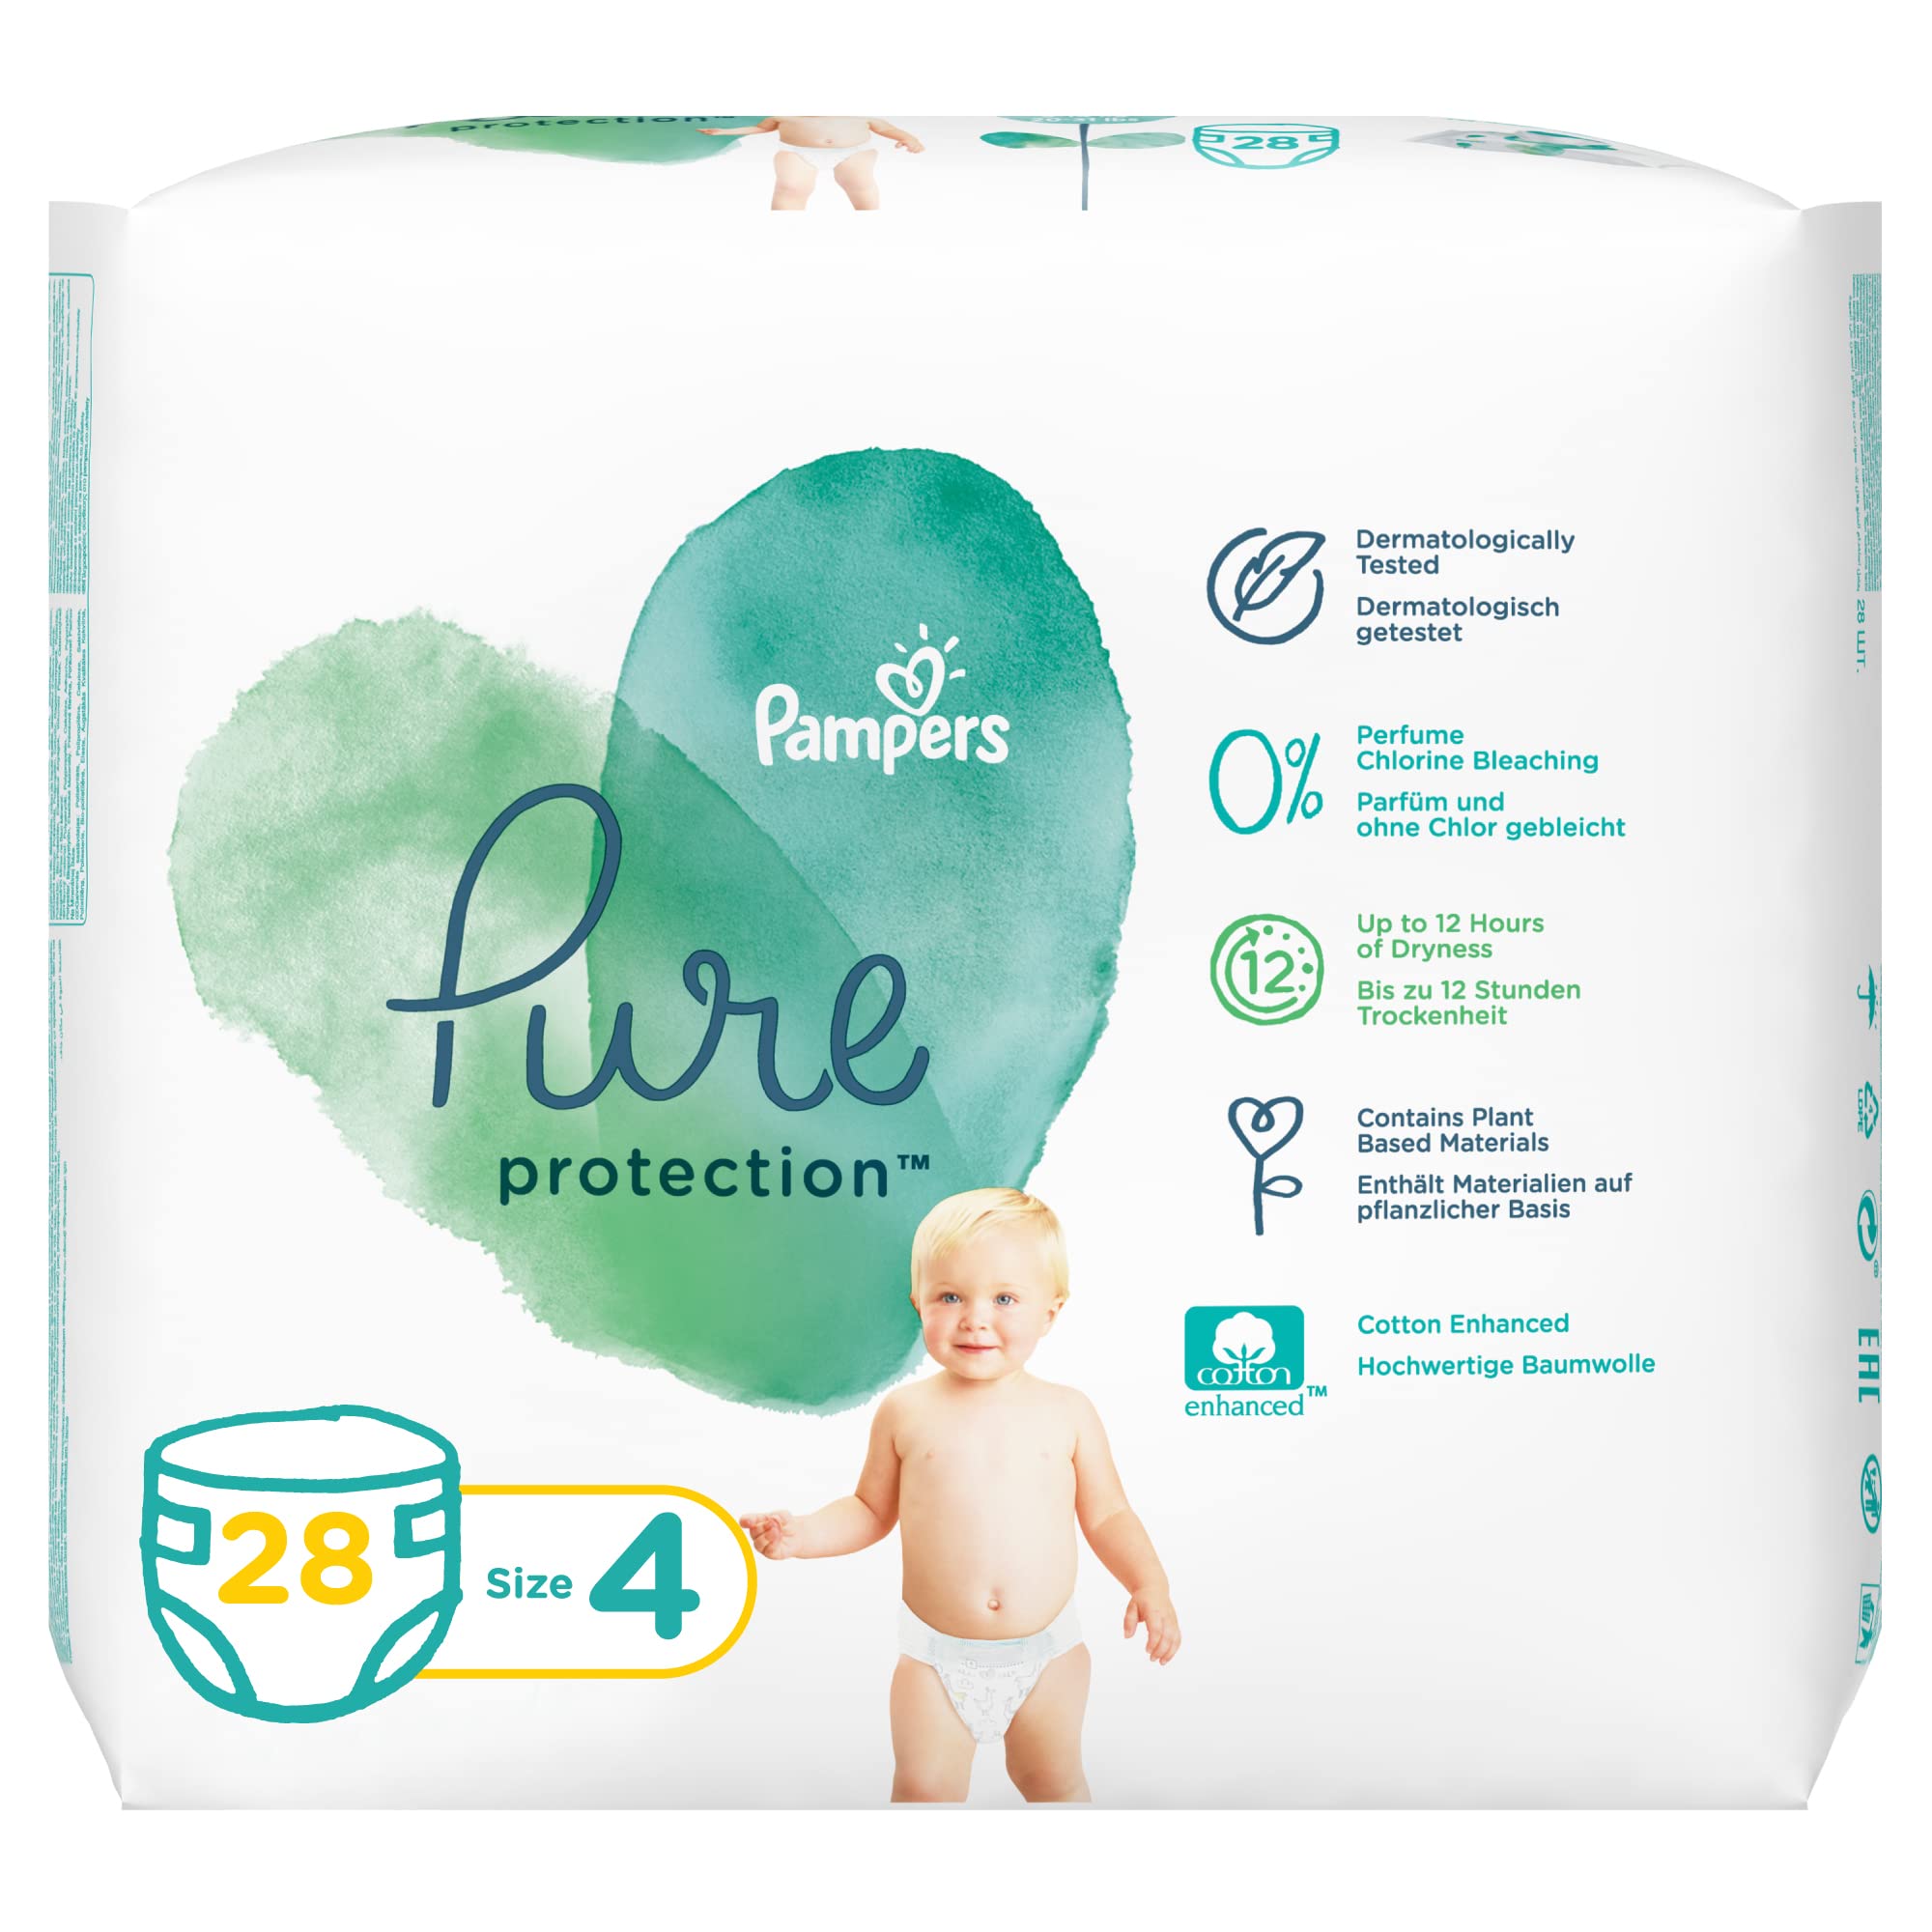 Pampers Pure Protection Diapers Size 4 9-14kg 28pcs حفاضات بيور بروتيكشن من بامبرز، مقاس 4، من 9 الى 14 كجم- عبوة من 28 قطعة